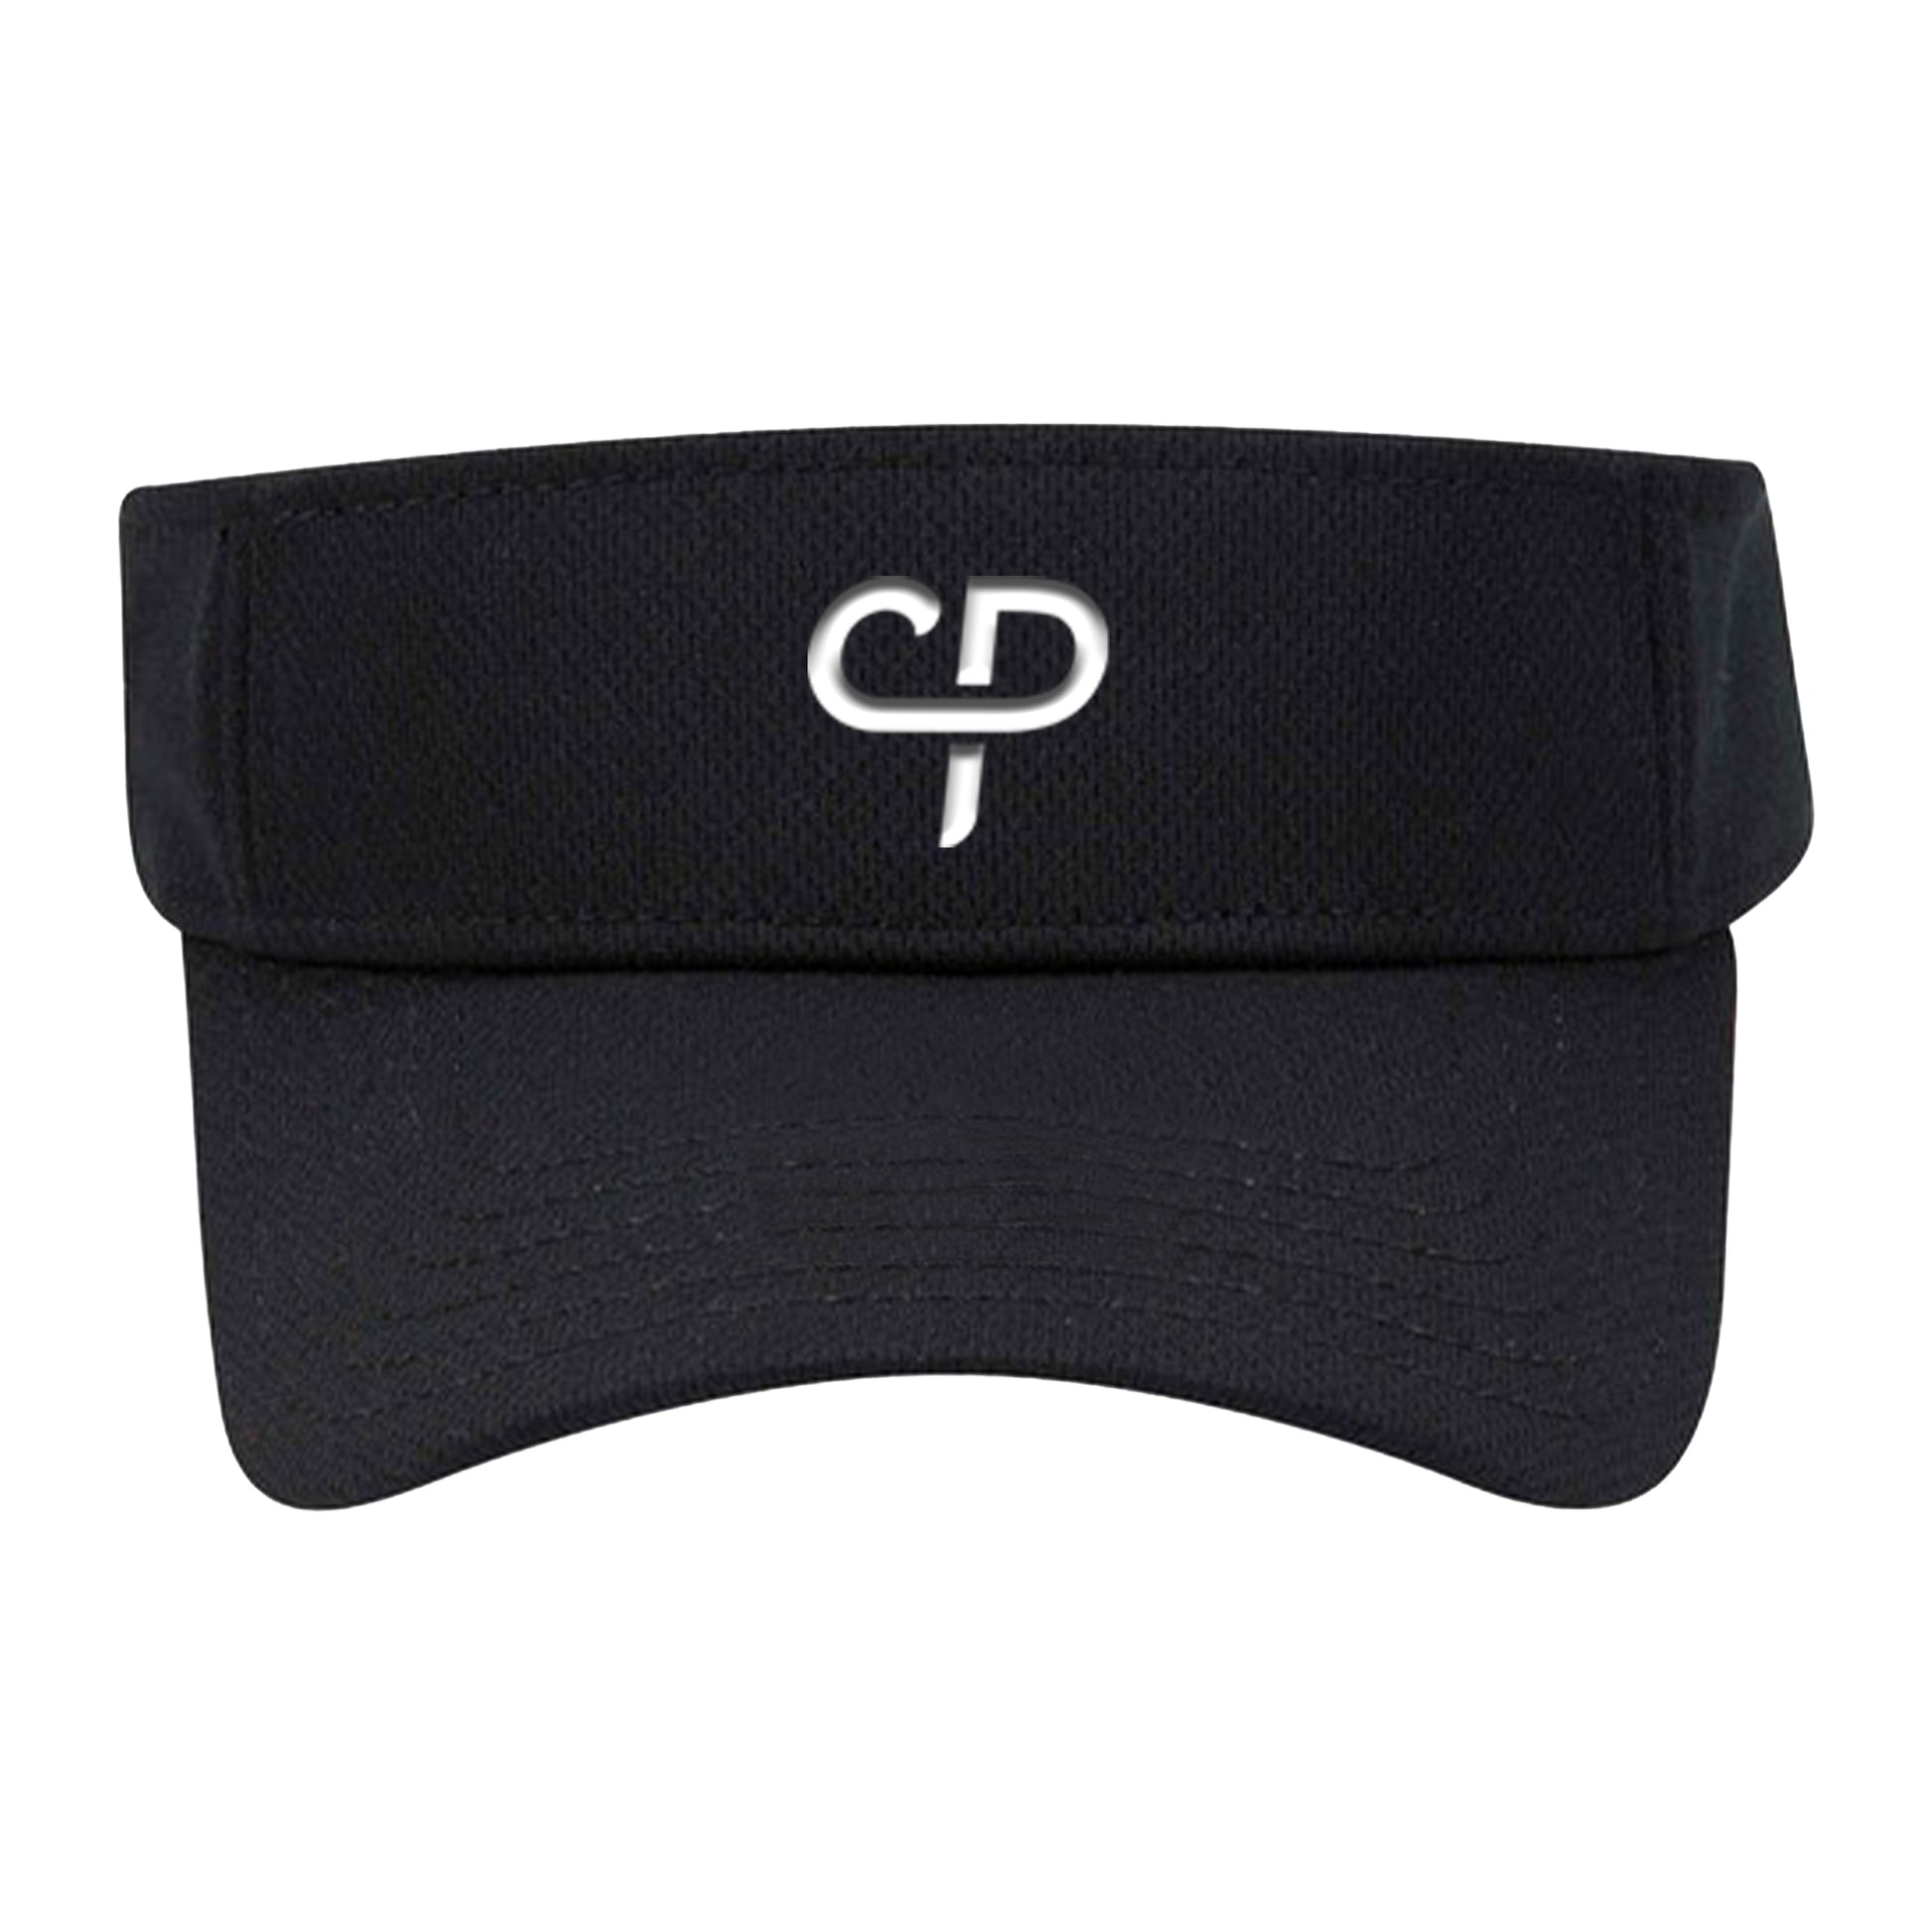 CP Parenteau pickleball athletic performance visor in black front view white logo